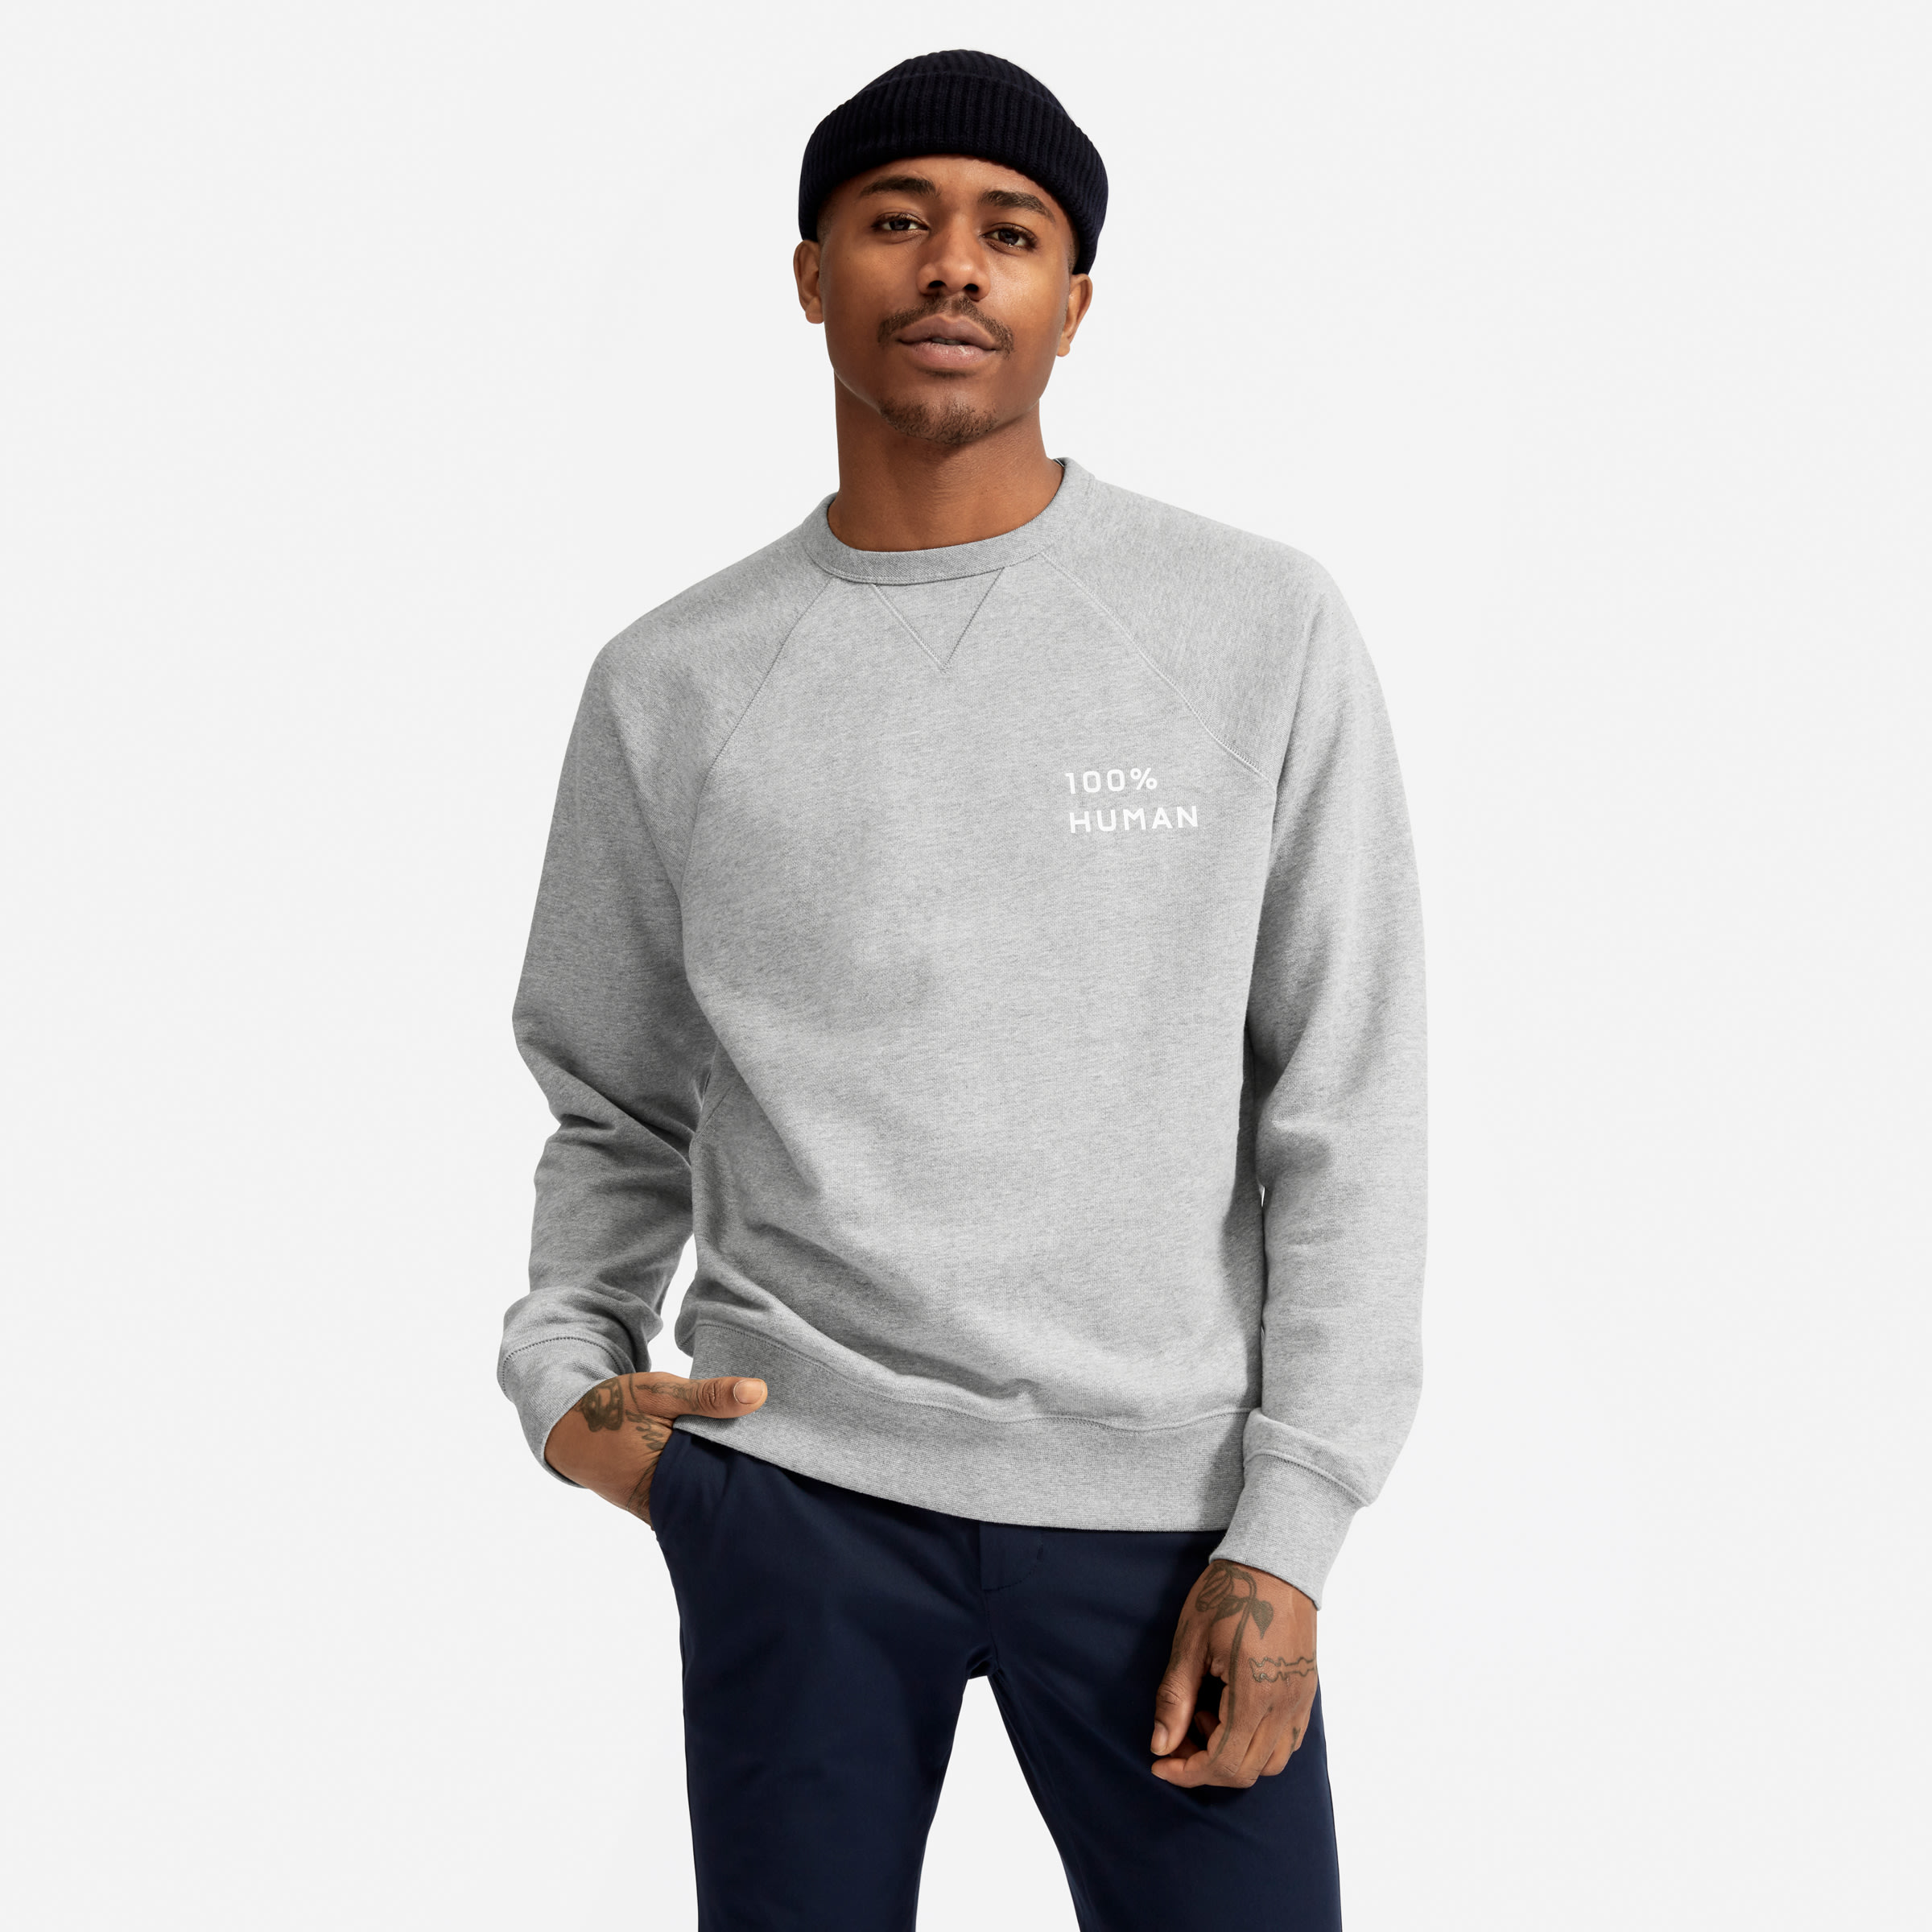 The 100% Human® Sweatshirt Heathered Grey – Everlane